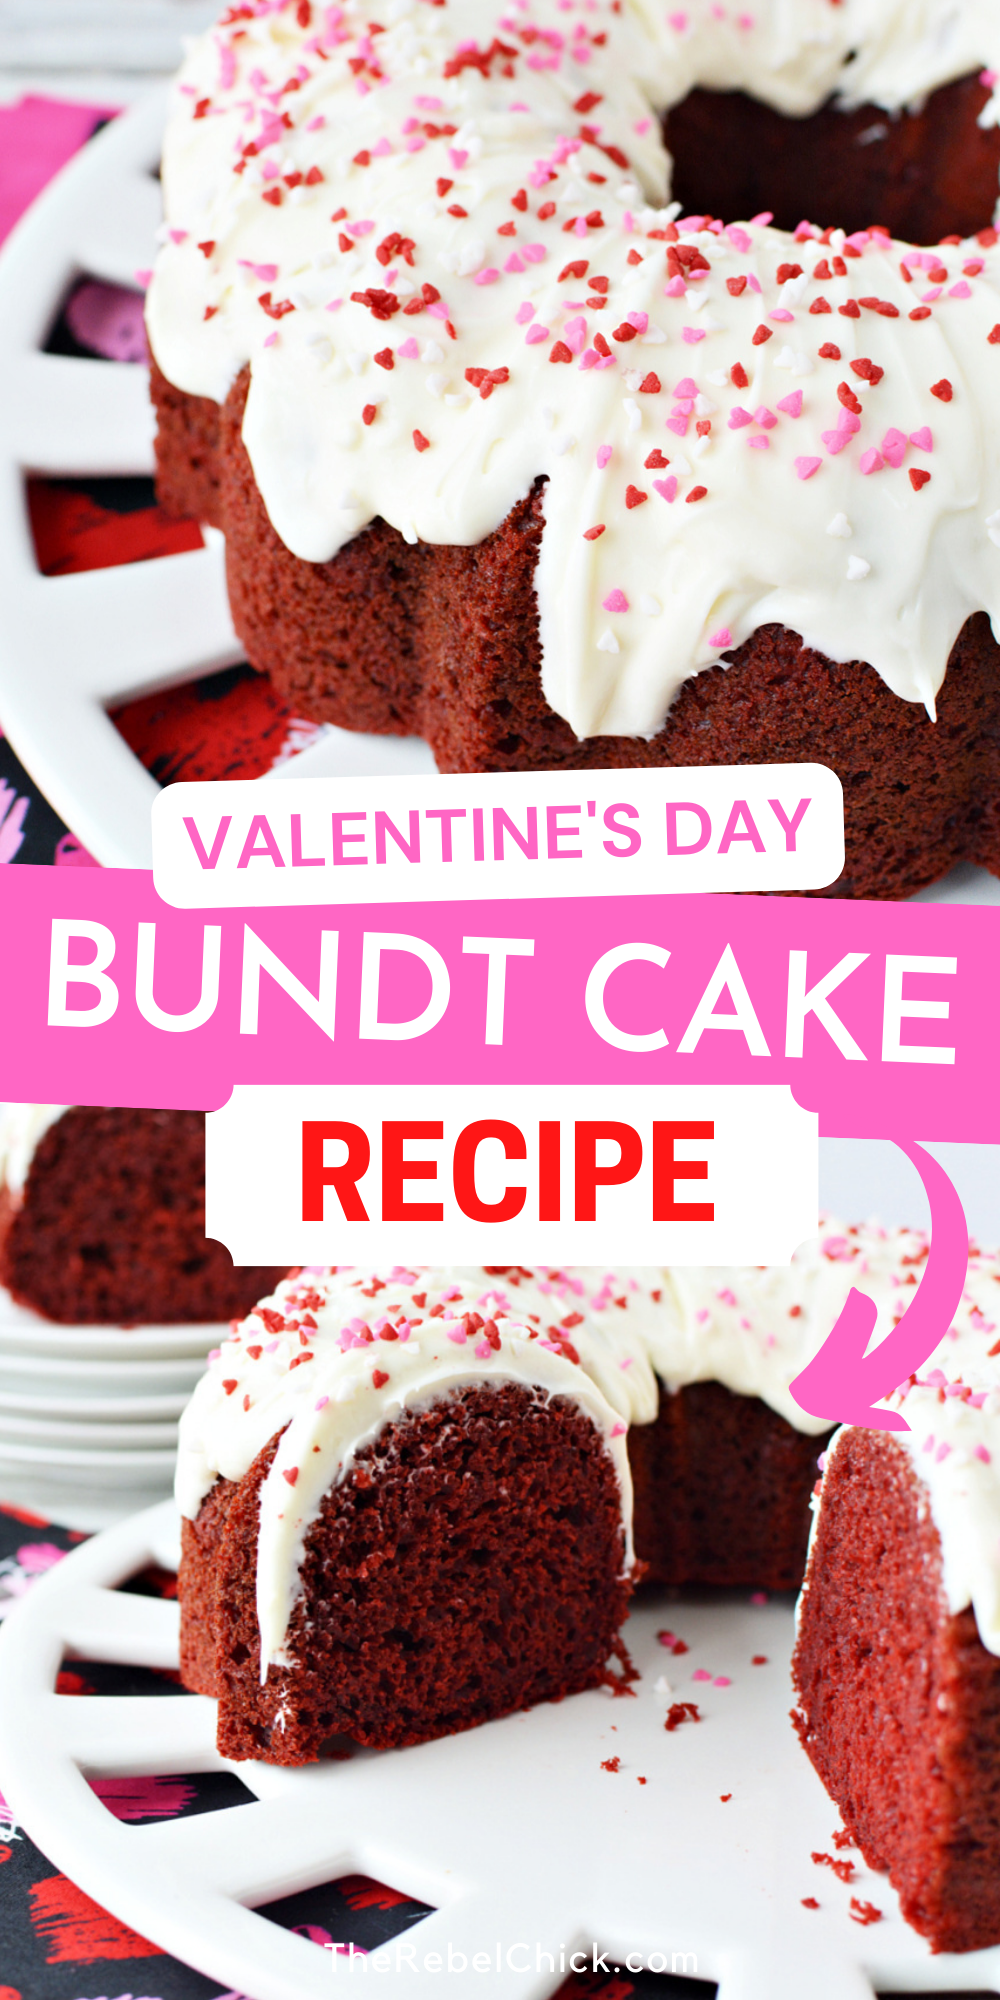 Red Velvet Bundt Cake covered in white frosting and valentines day sprinkles